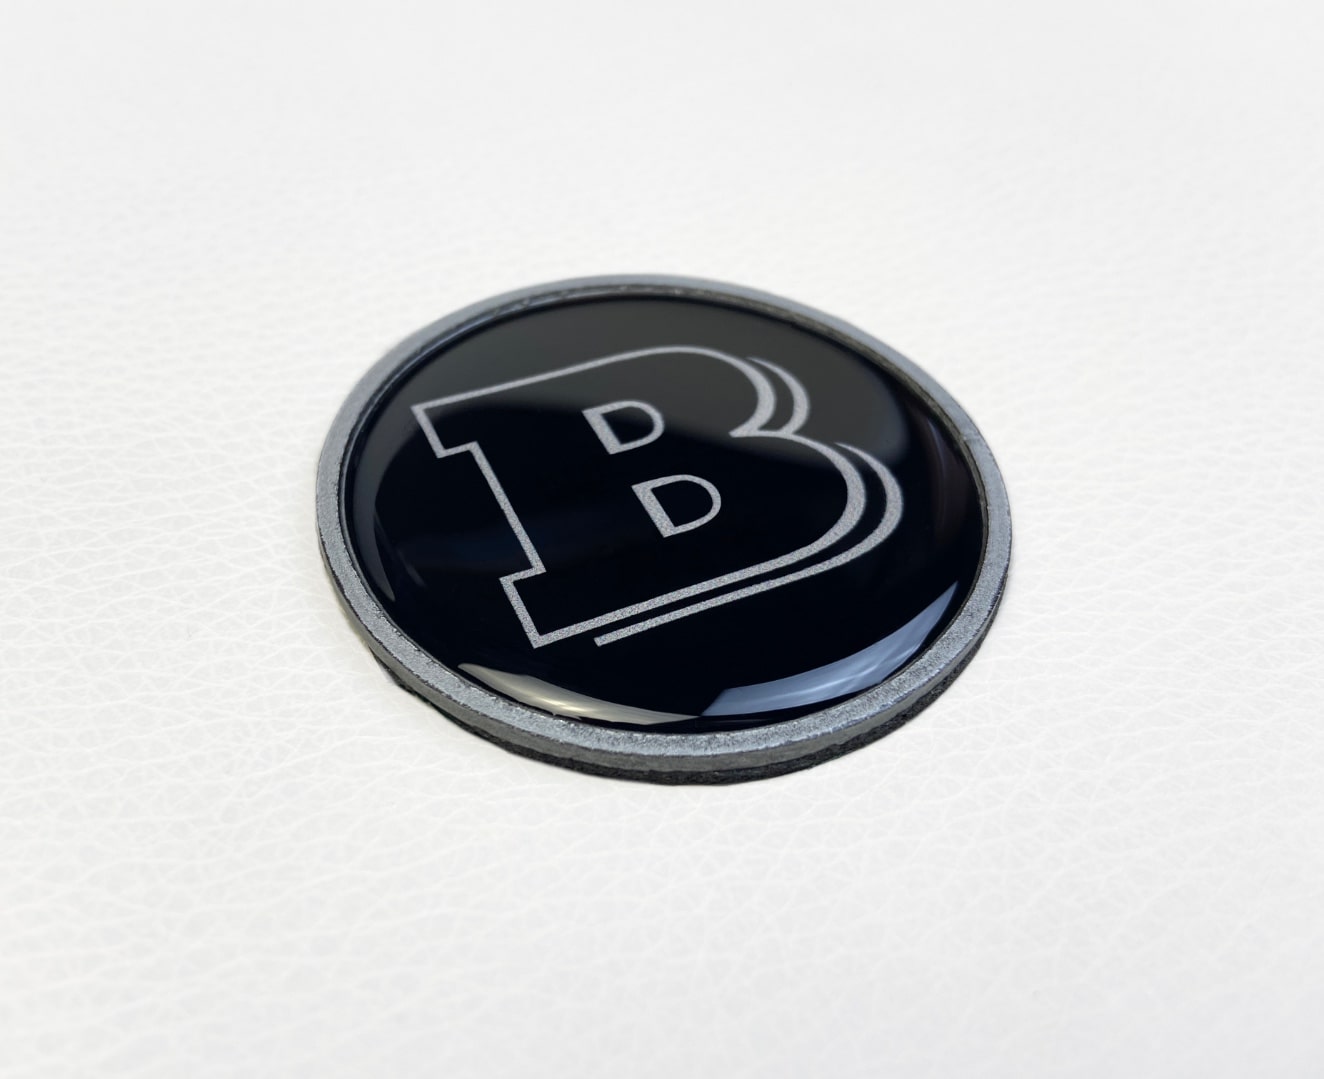 Metal Floor Mats Emblems Brabus Badge Logo for Mercedes-Benz W463